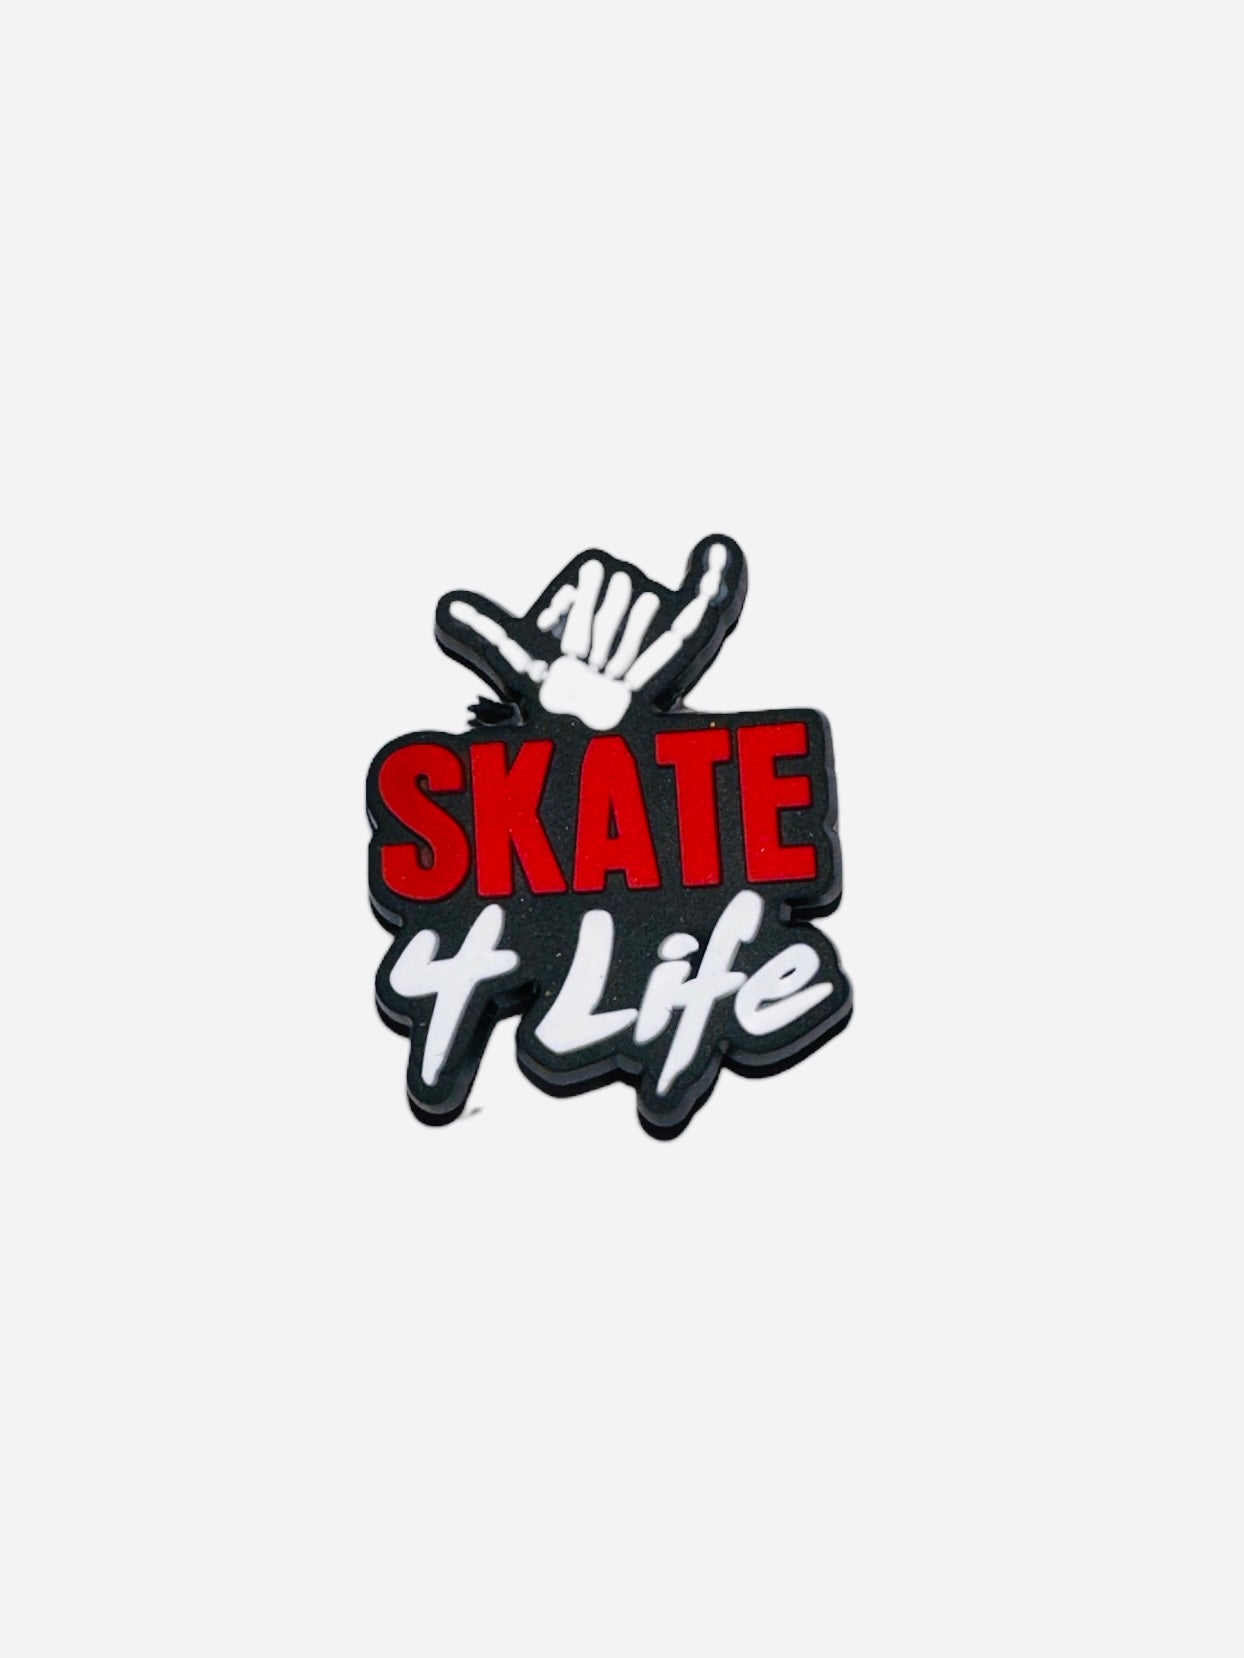 BiTZ - skate 4 life